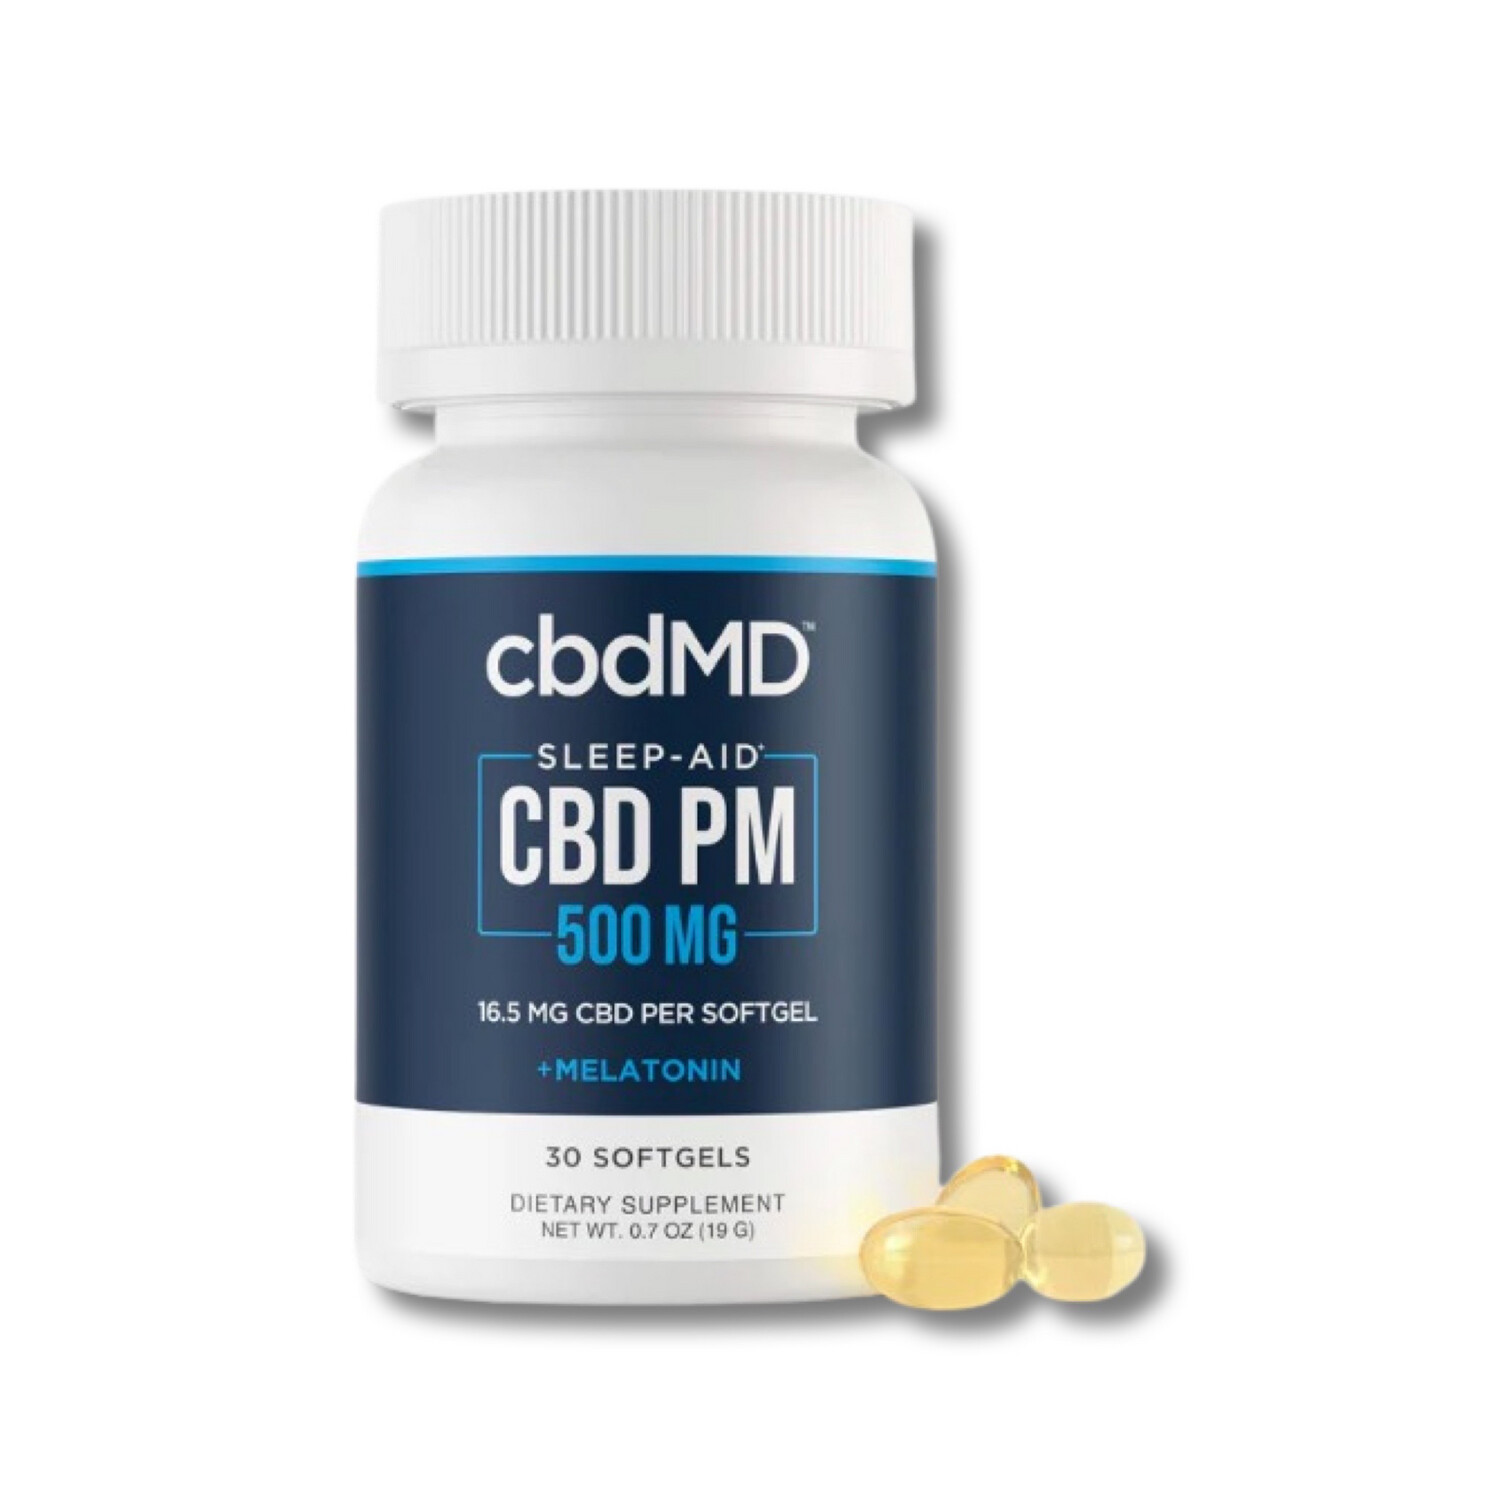 CBDMD PM Sleep-Aid Softgel - 500mg - 30 count